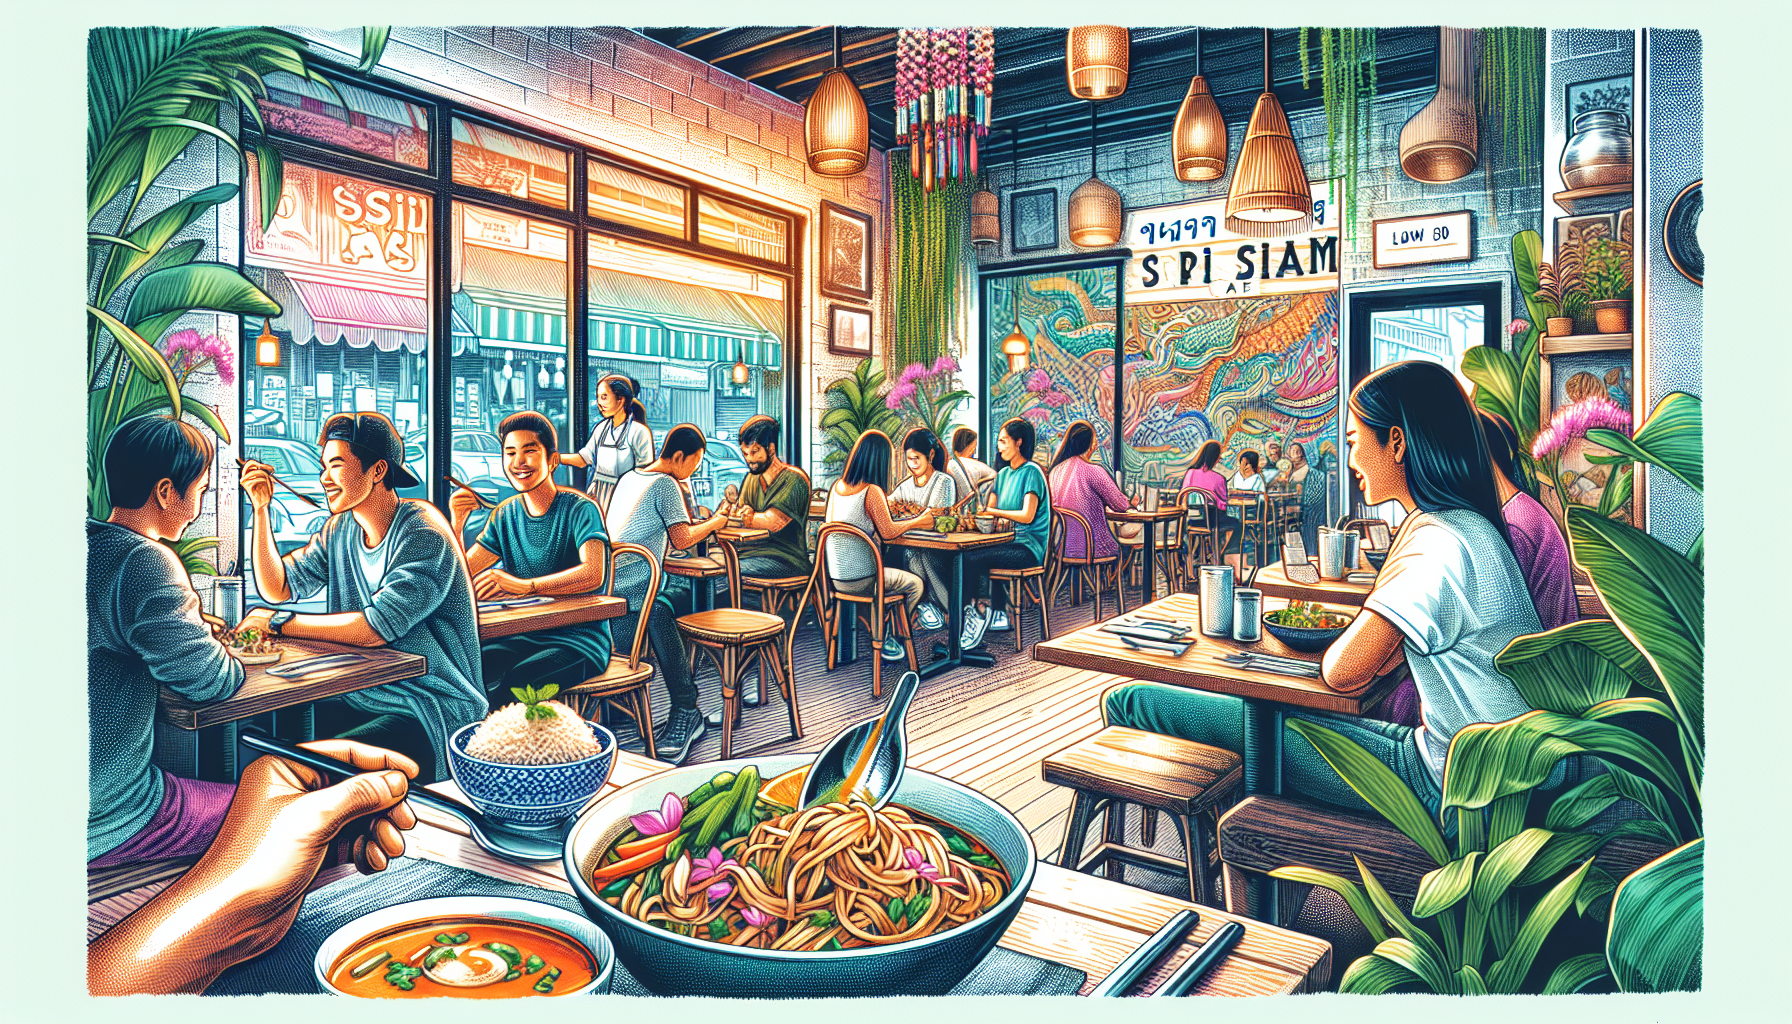 sri siam cafe review - thai restaurant los angeles